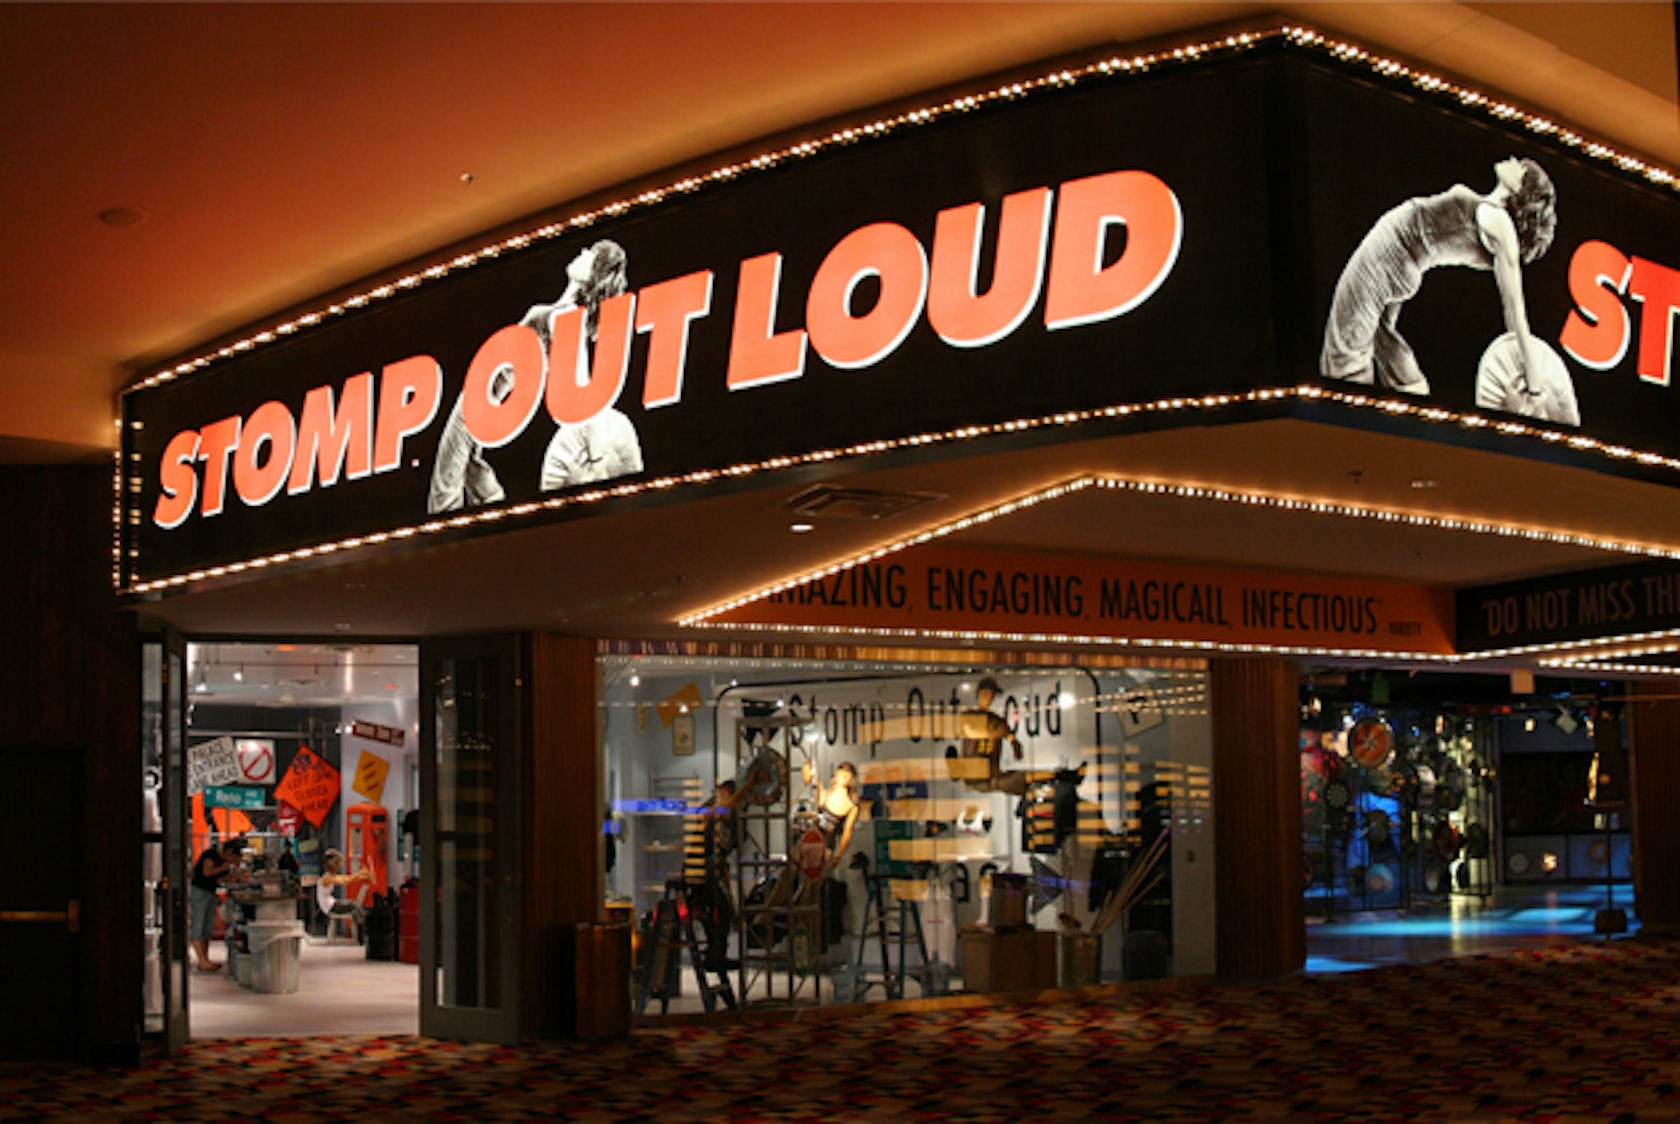 Stomp Out Loud, Planet Hollywood Las Vegas - Architizer